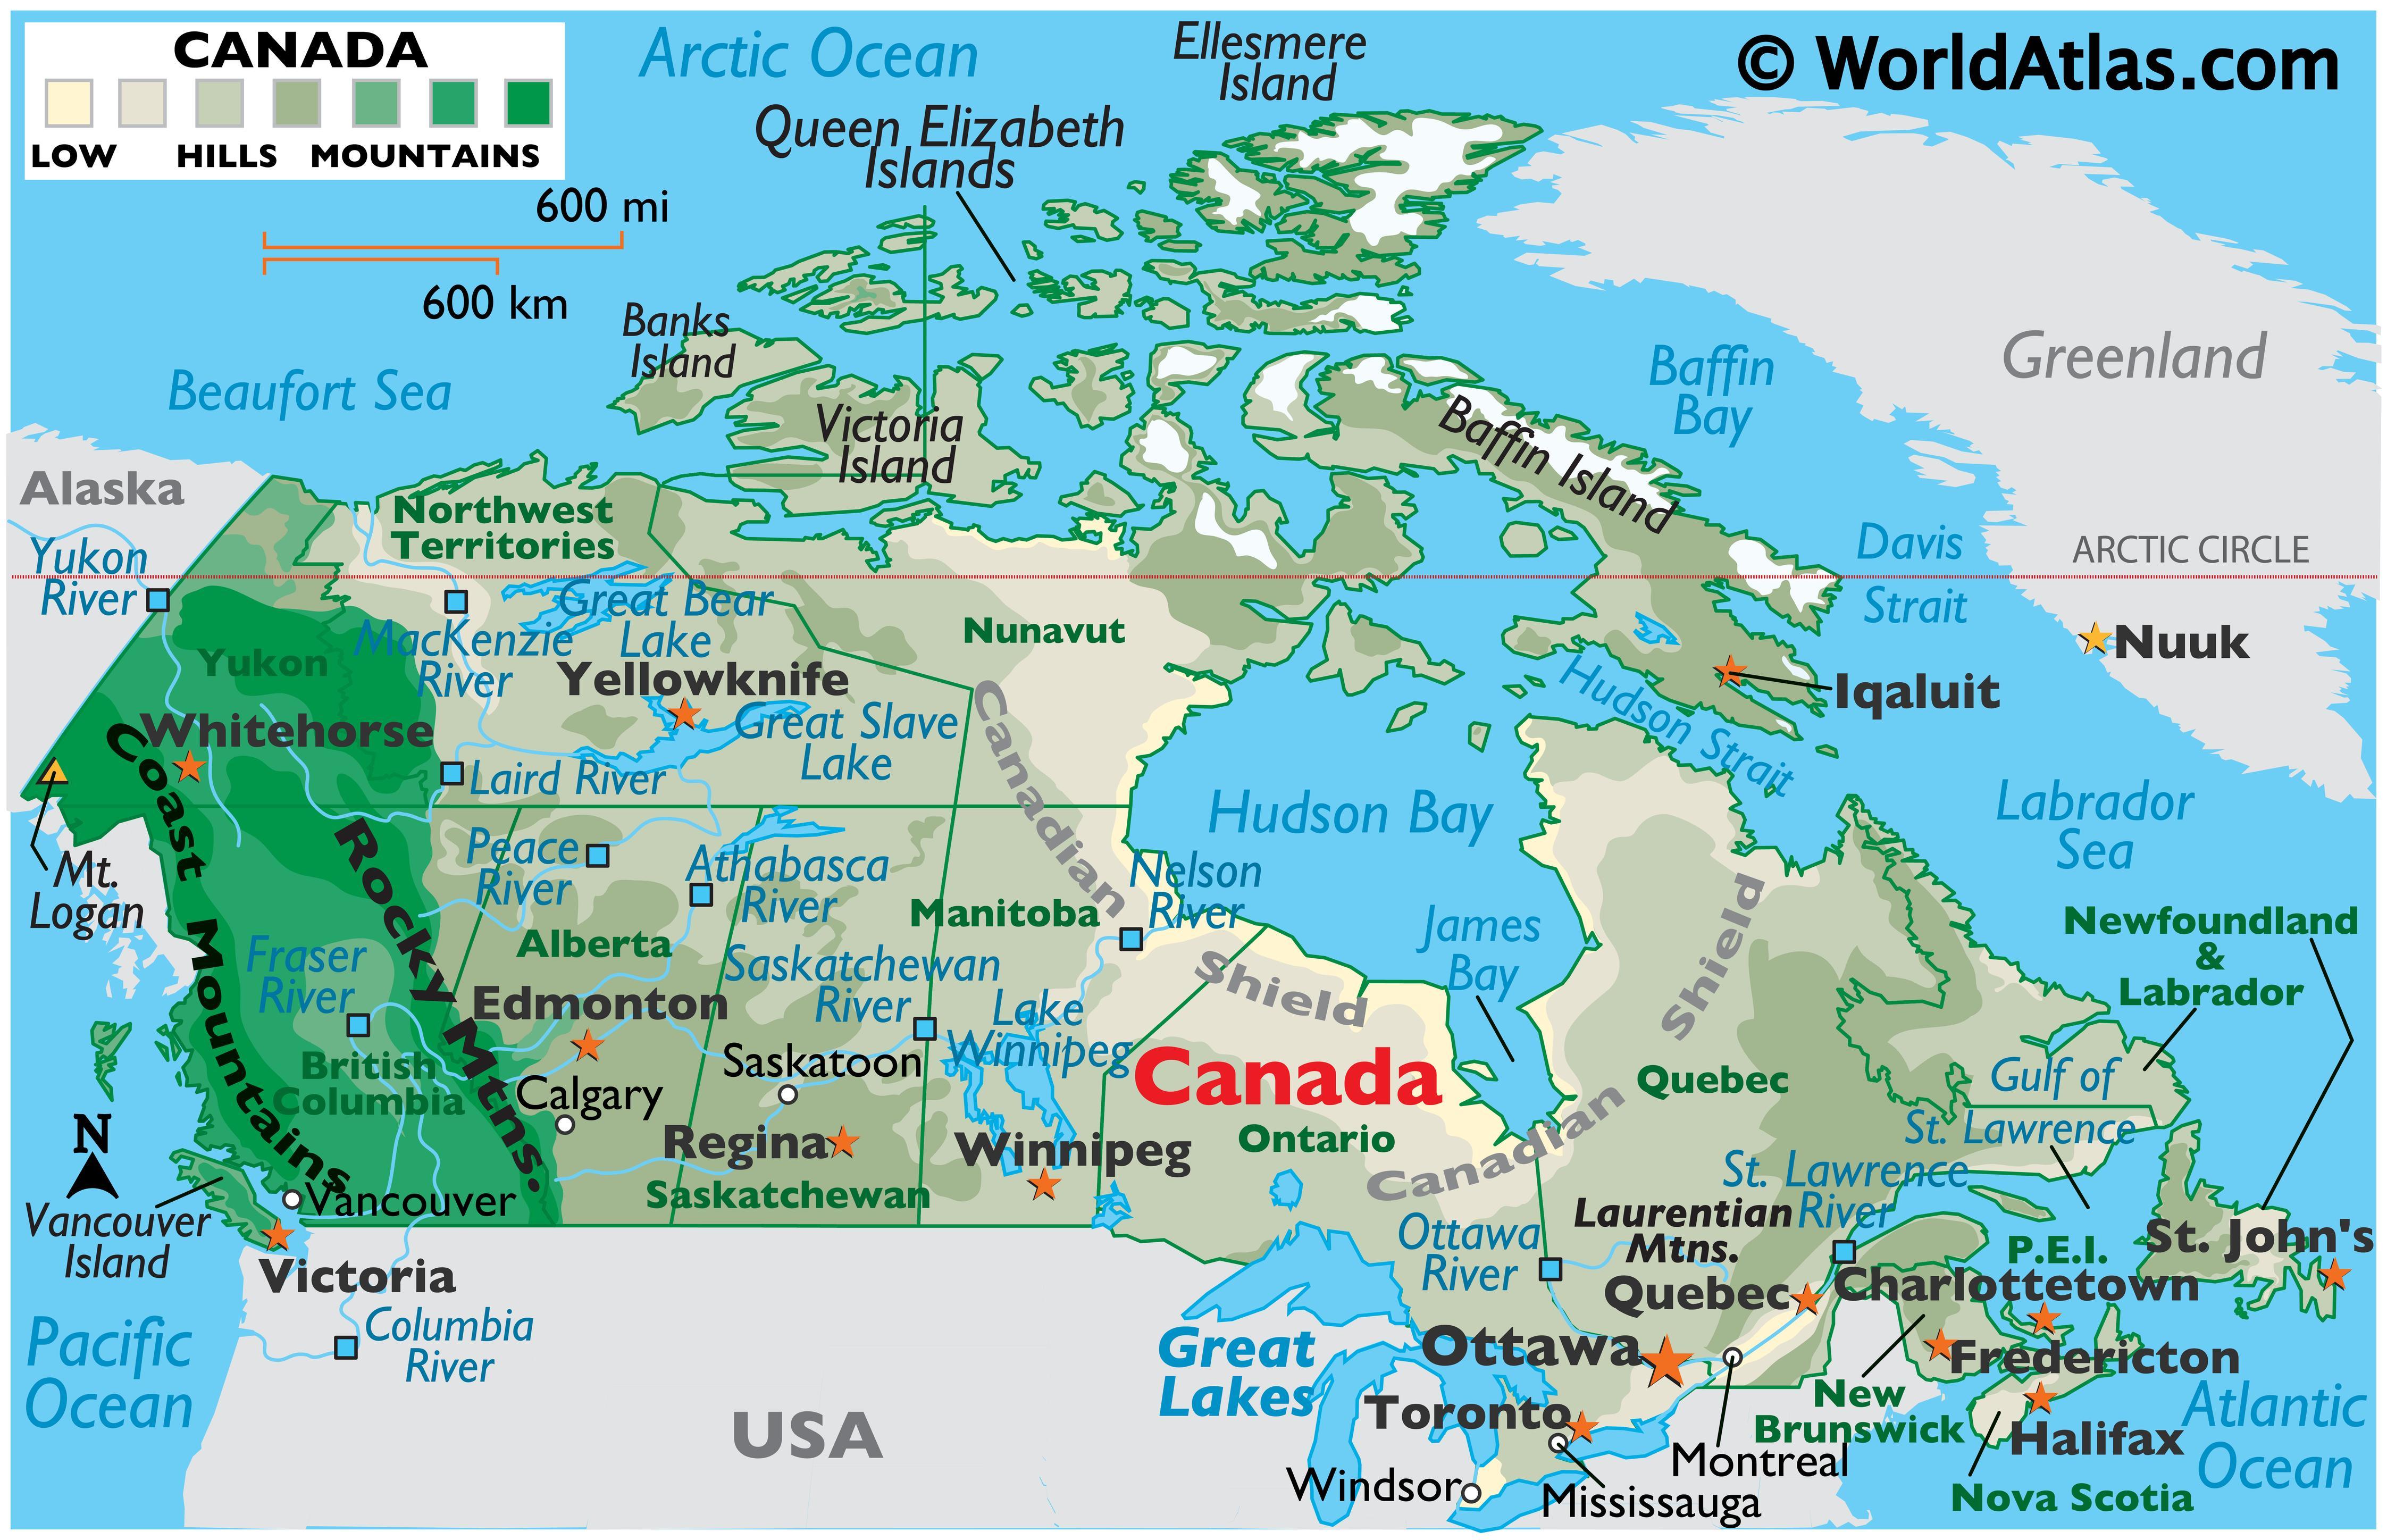 Canada Landforms And Land Statistics Hills Lakes Mountains Plains